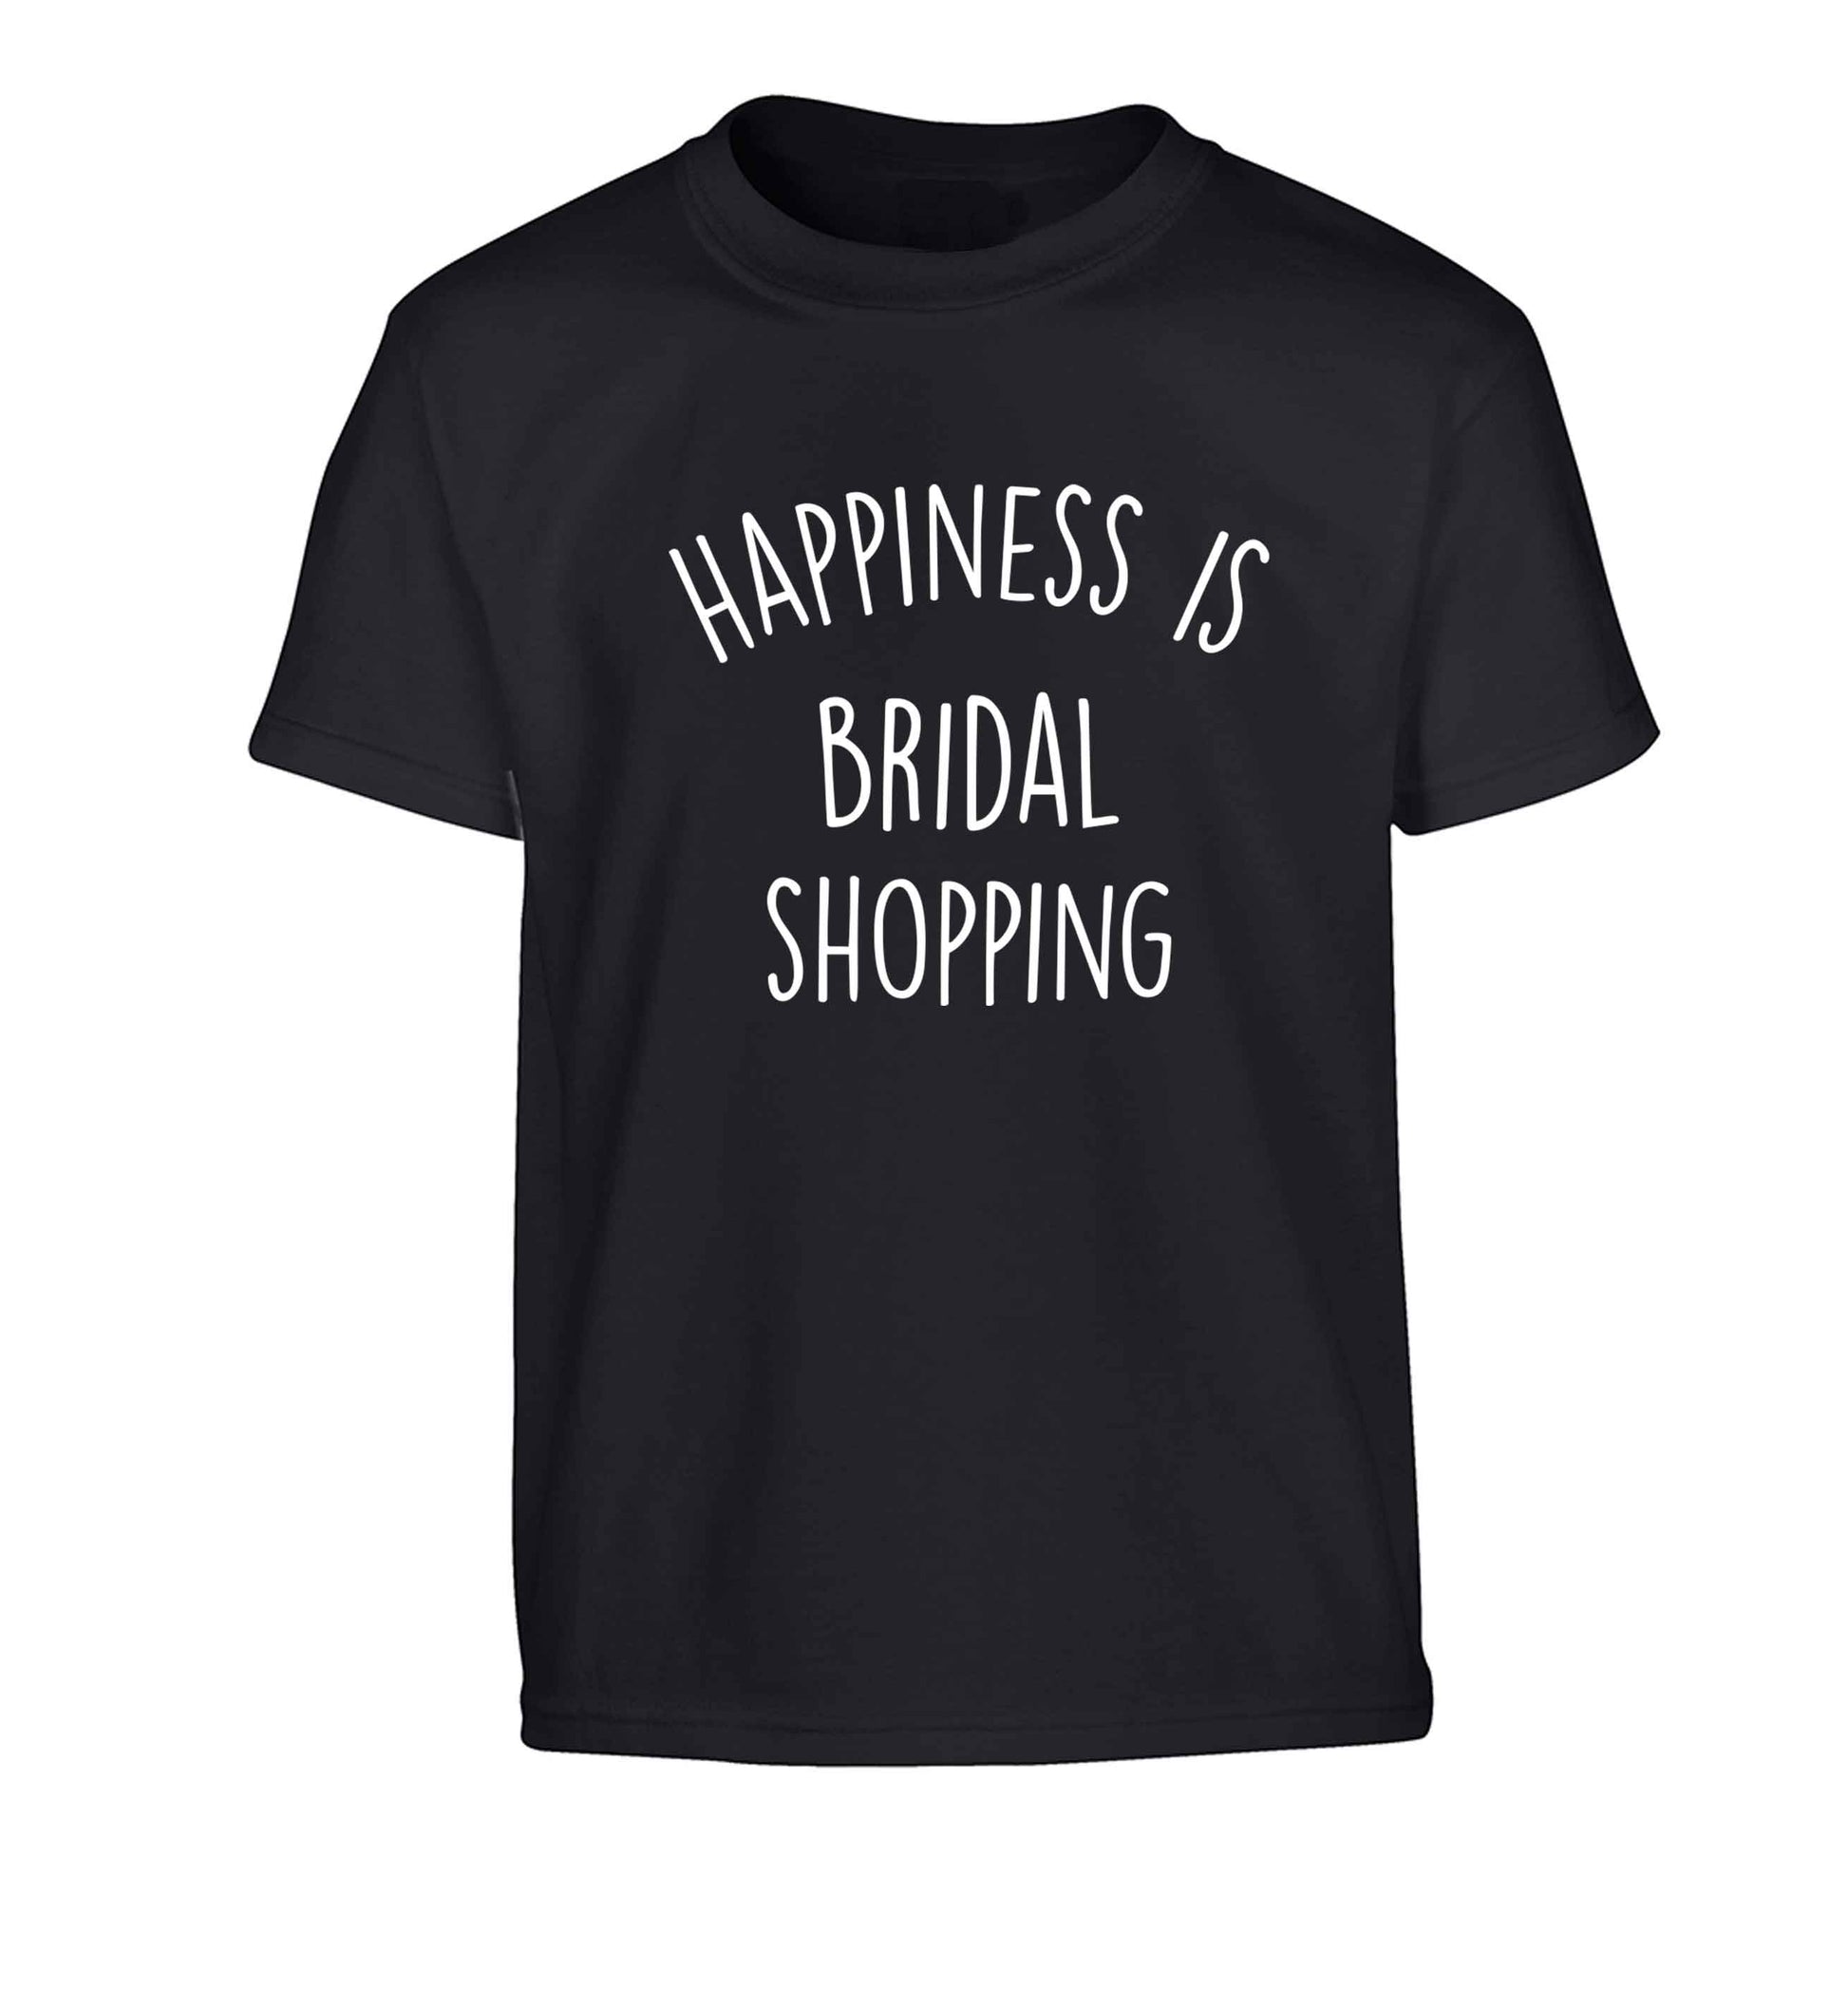 Happiness is bridal shopping Children's black Tshirt 12-13 Years